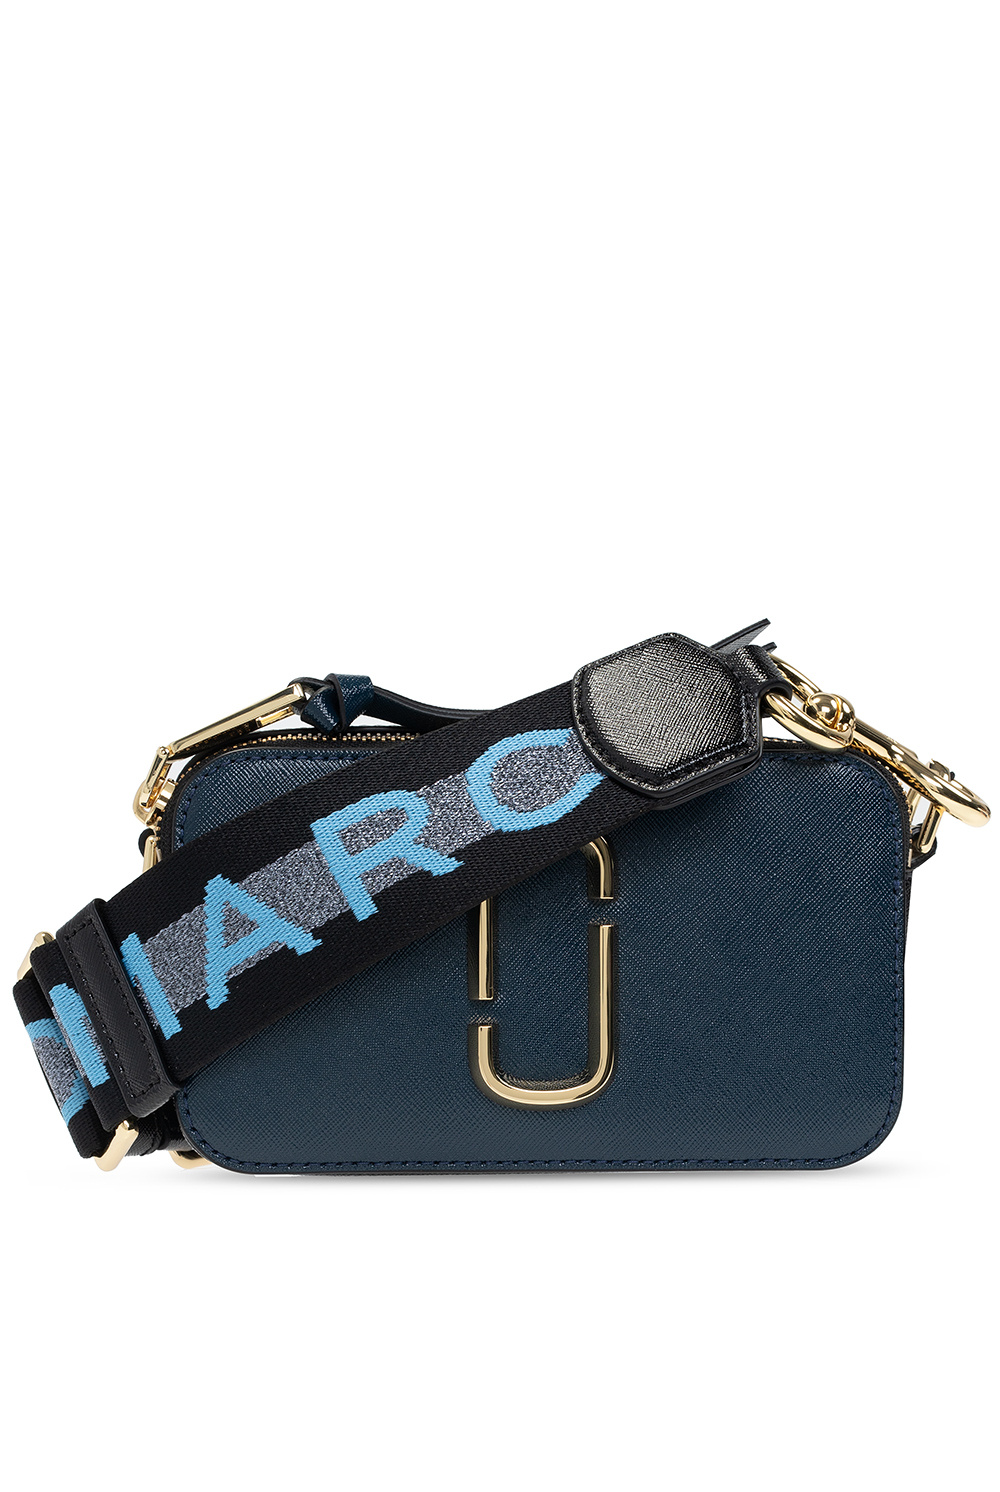 Marc Jacobs, Bags, Pinkpurple Marc Jacobs Snapshot Bag